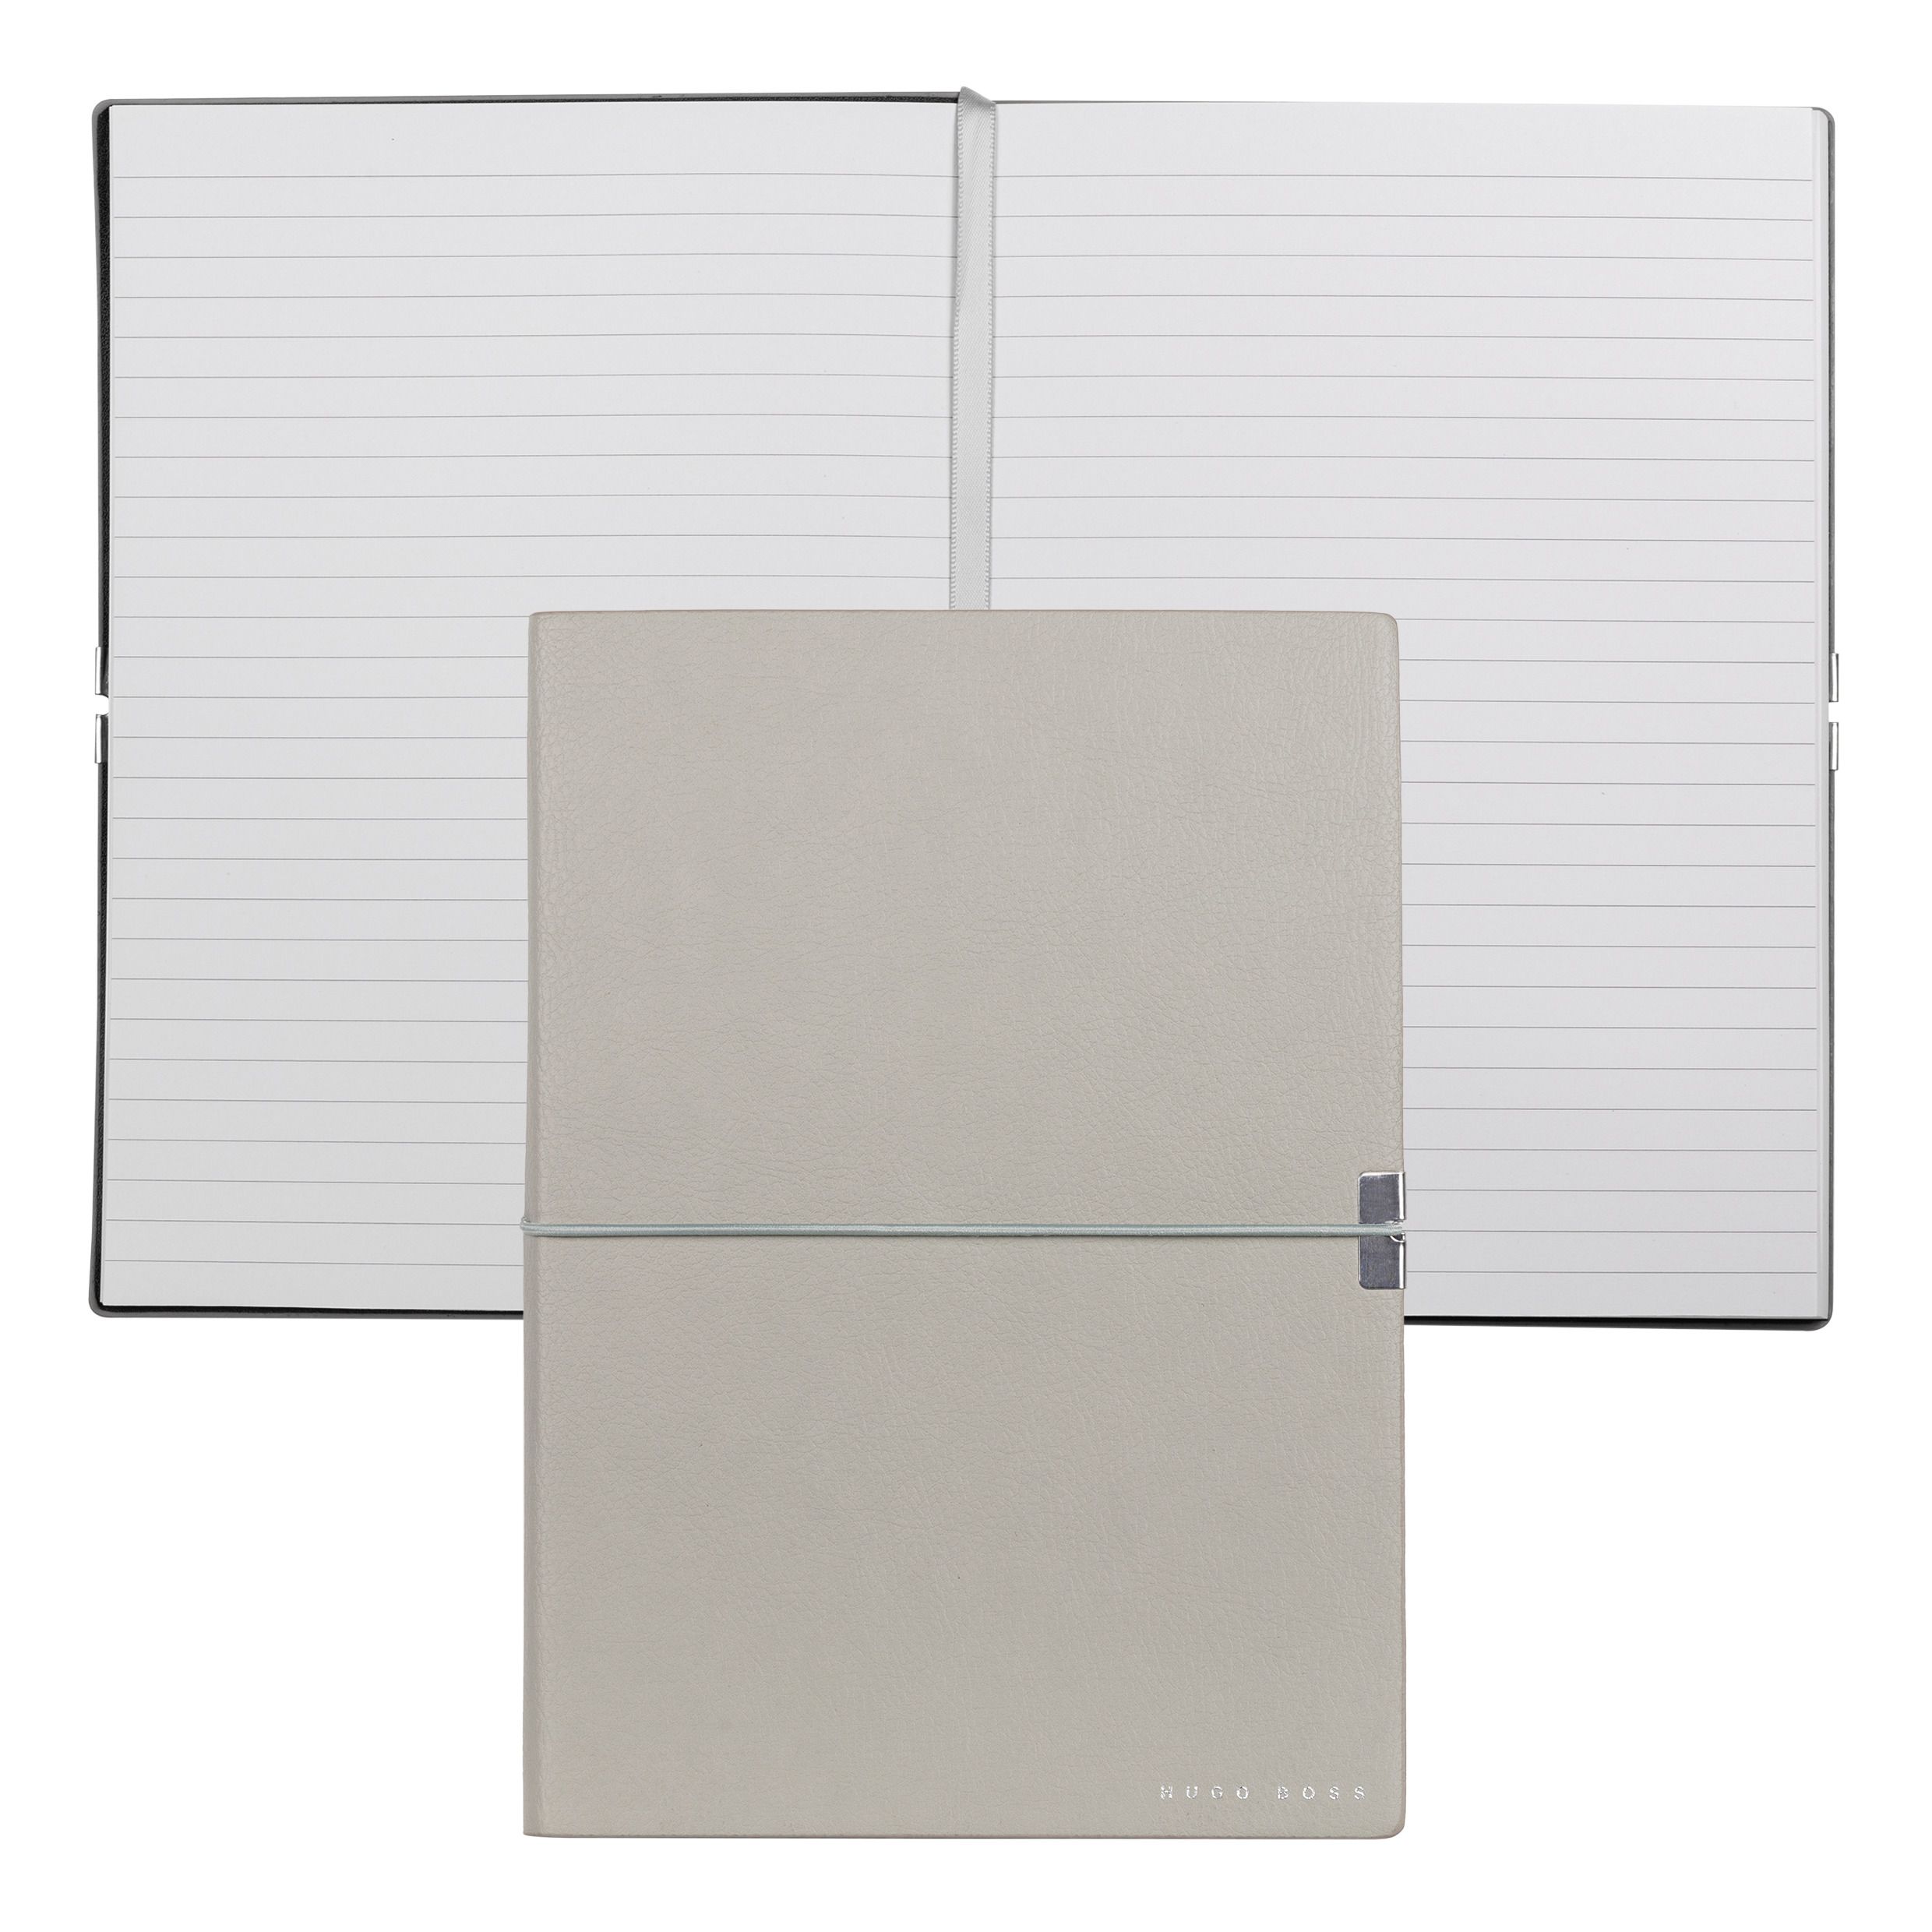 Hugo Boss A5 Note Book Elegance Storyline Grey Line